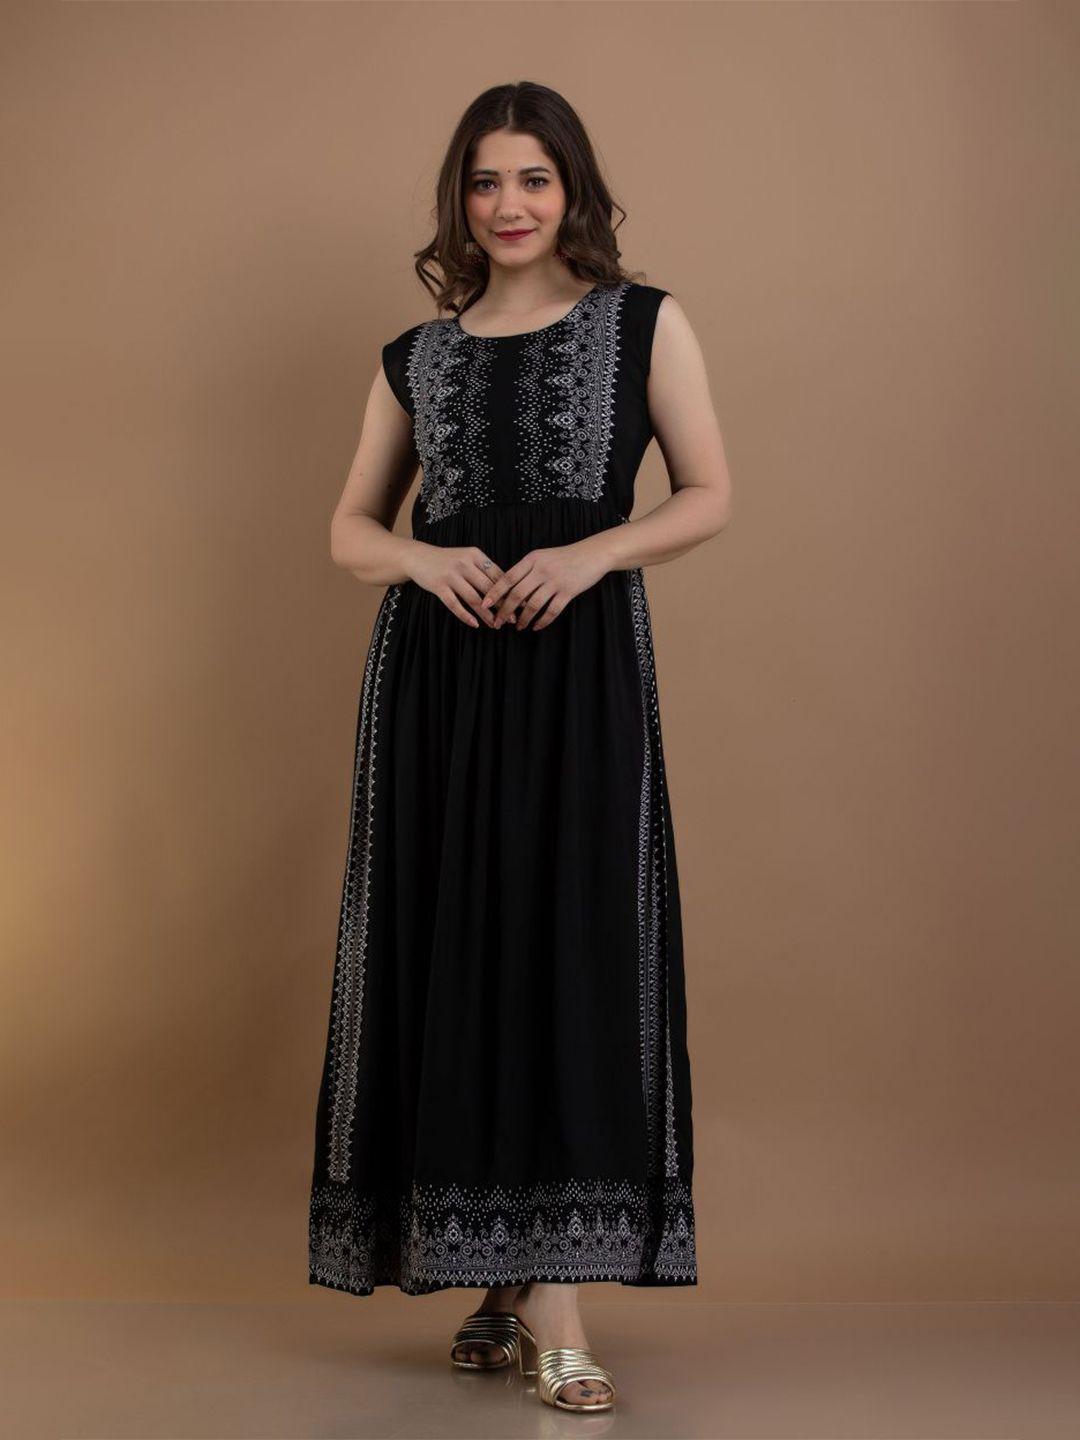 purshottam wala black ethnic motifs maxi maxi dress